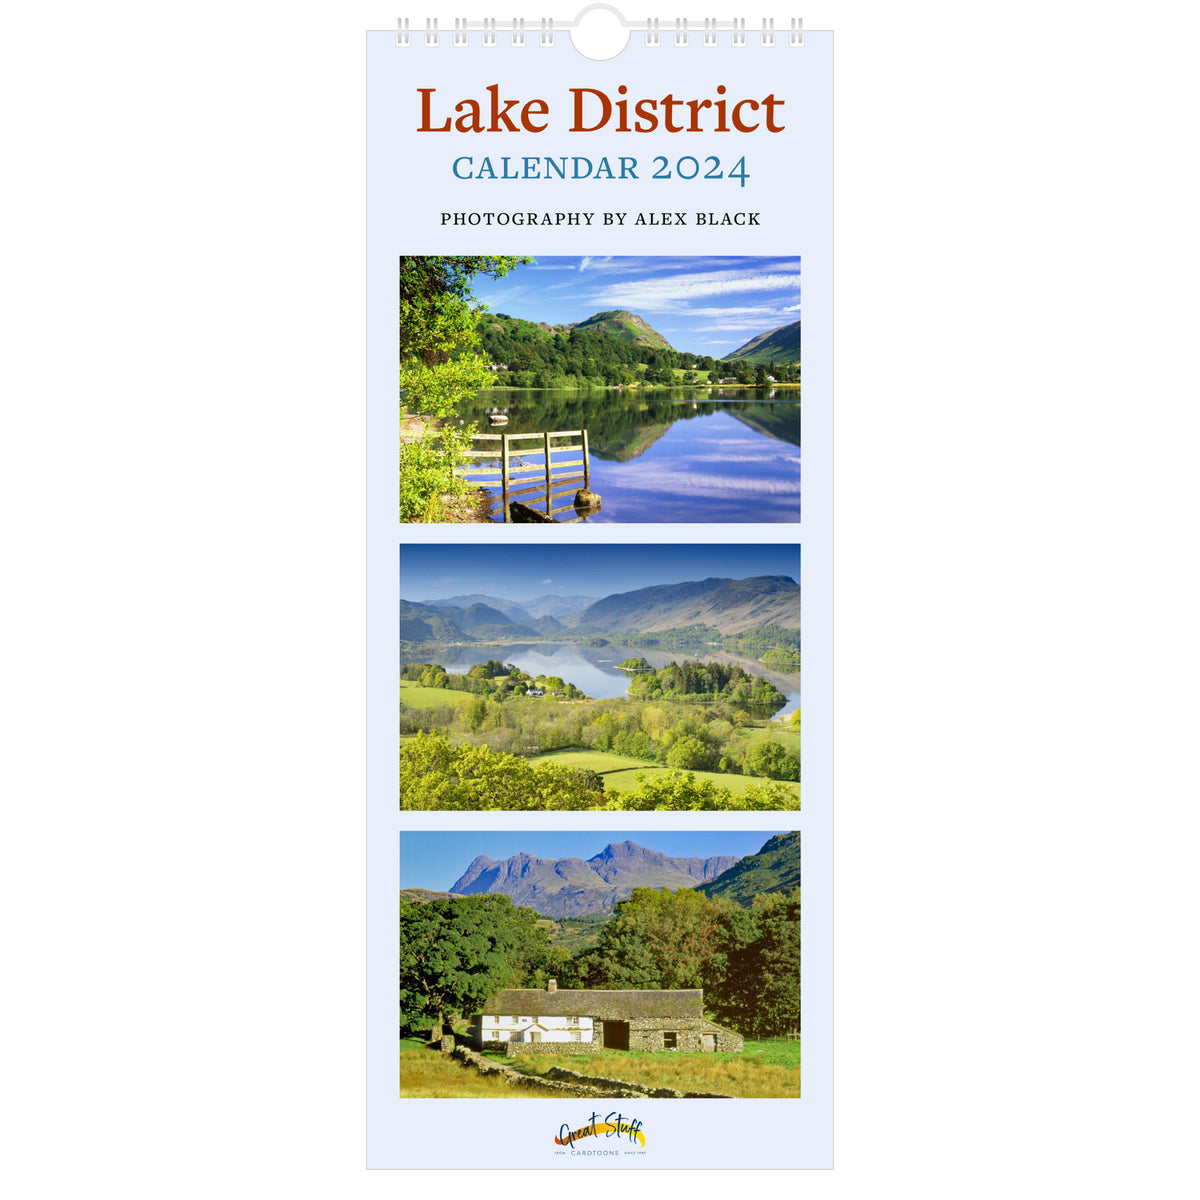 Lake District Slimline Calendar 2024 Cardtoons Publications Great